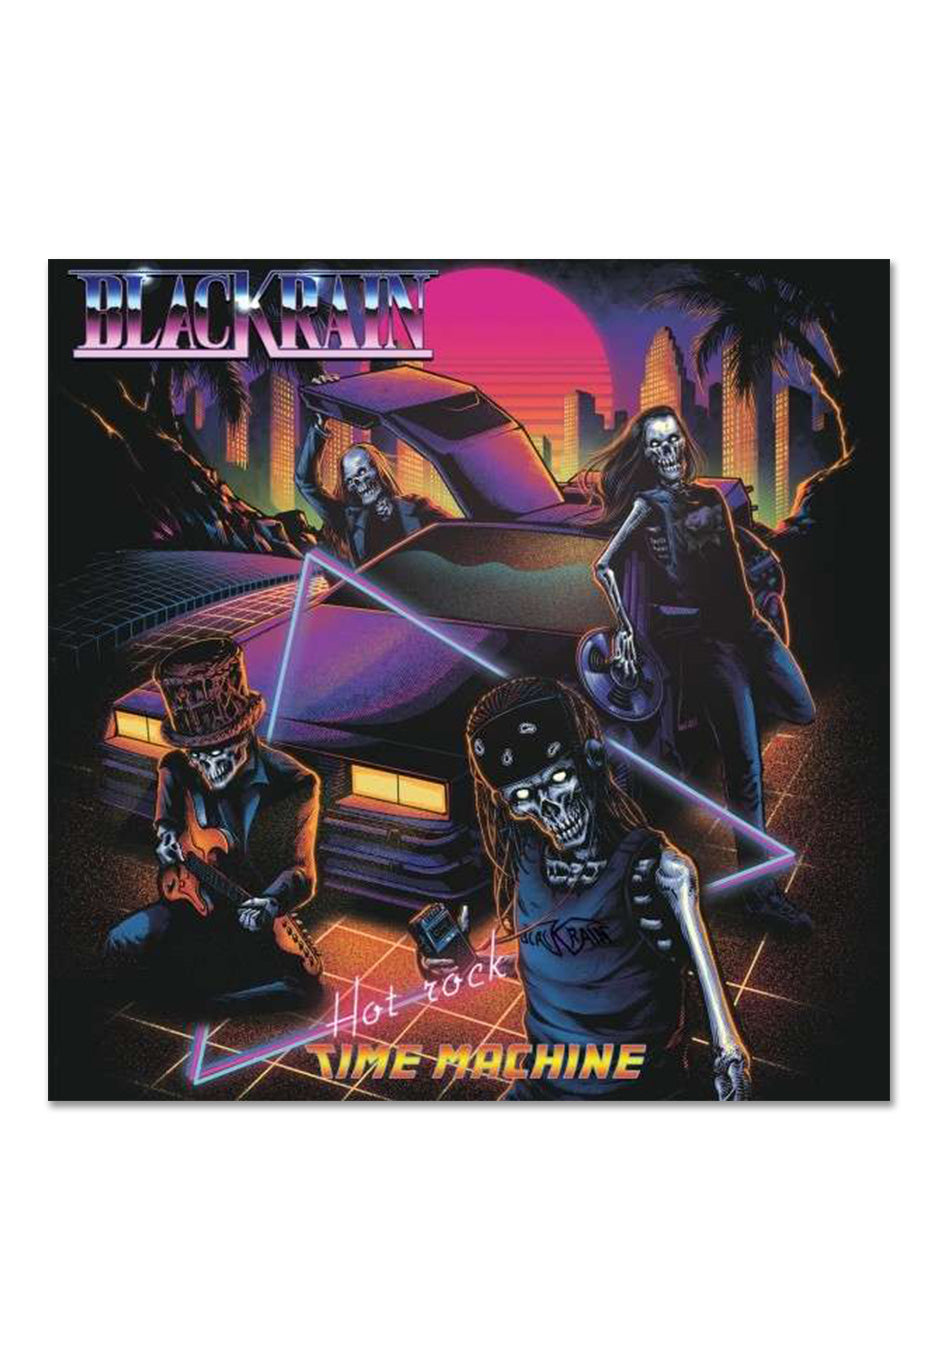 Blackrain - Hot Rock Time Machine - Vinyl